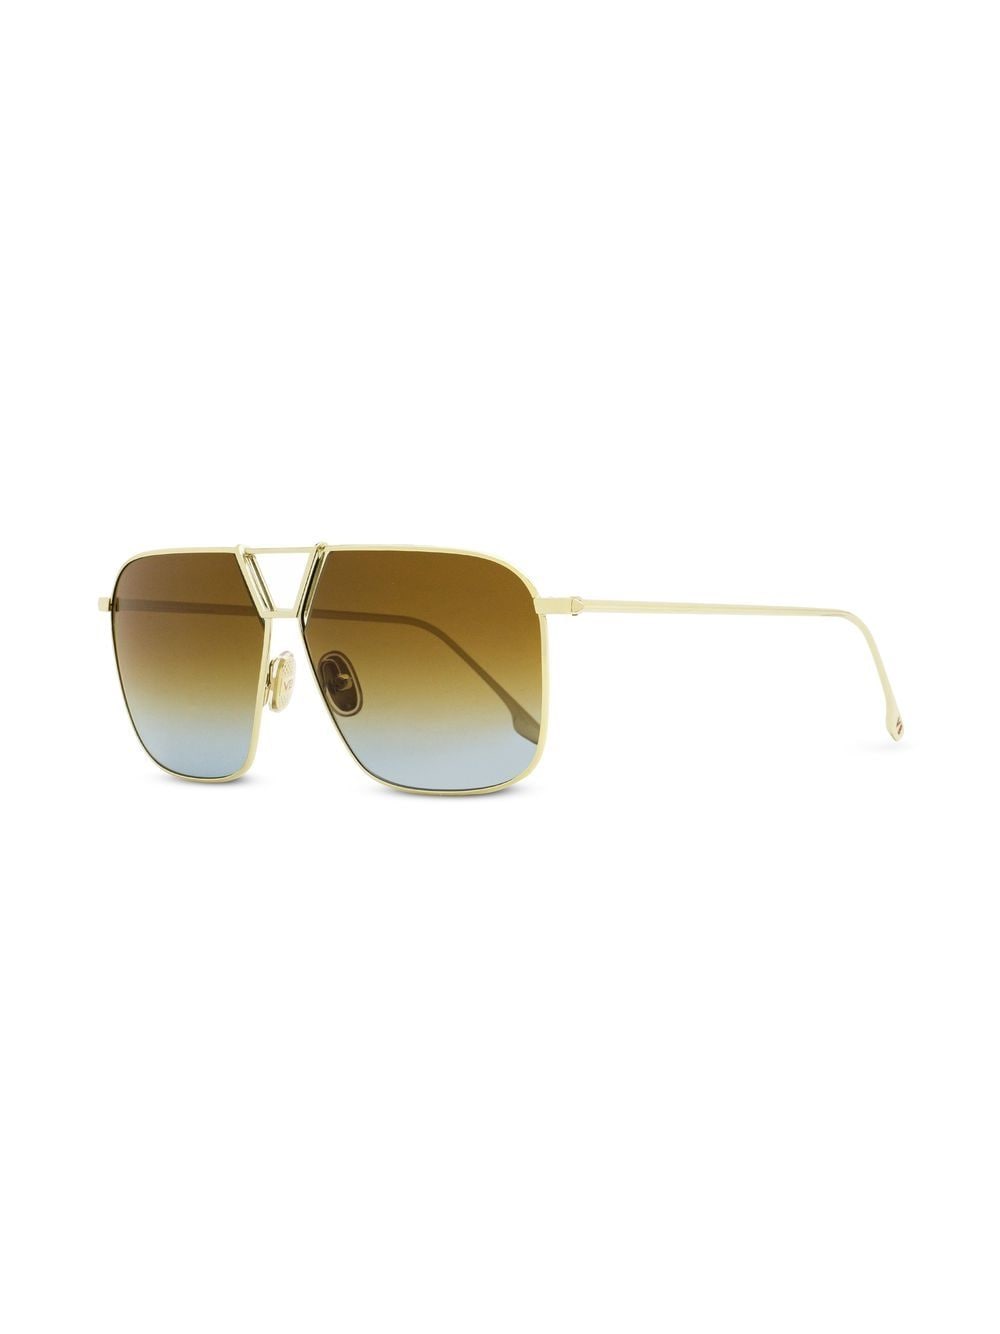 Victoria Beckham Eyewear VB204S zonnebril met navigator montuur - Goud